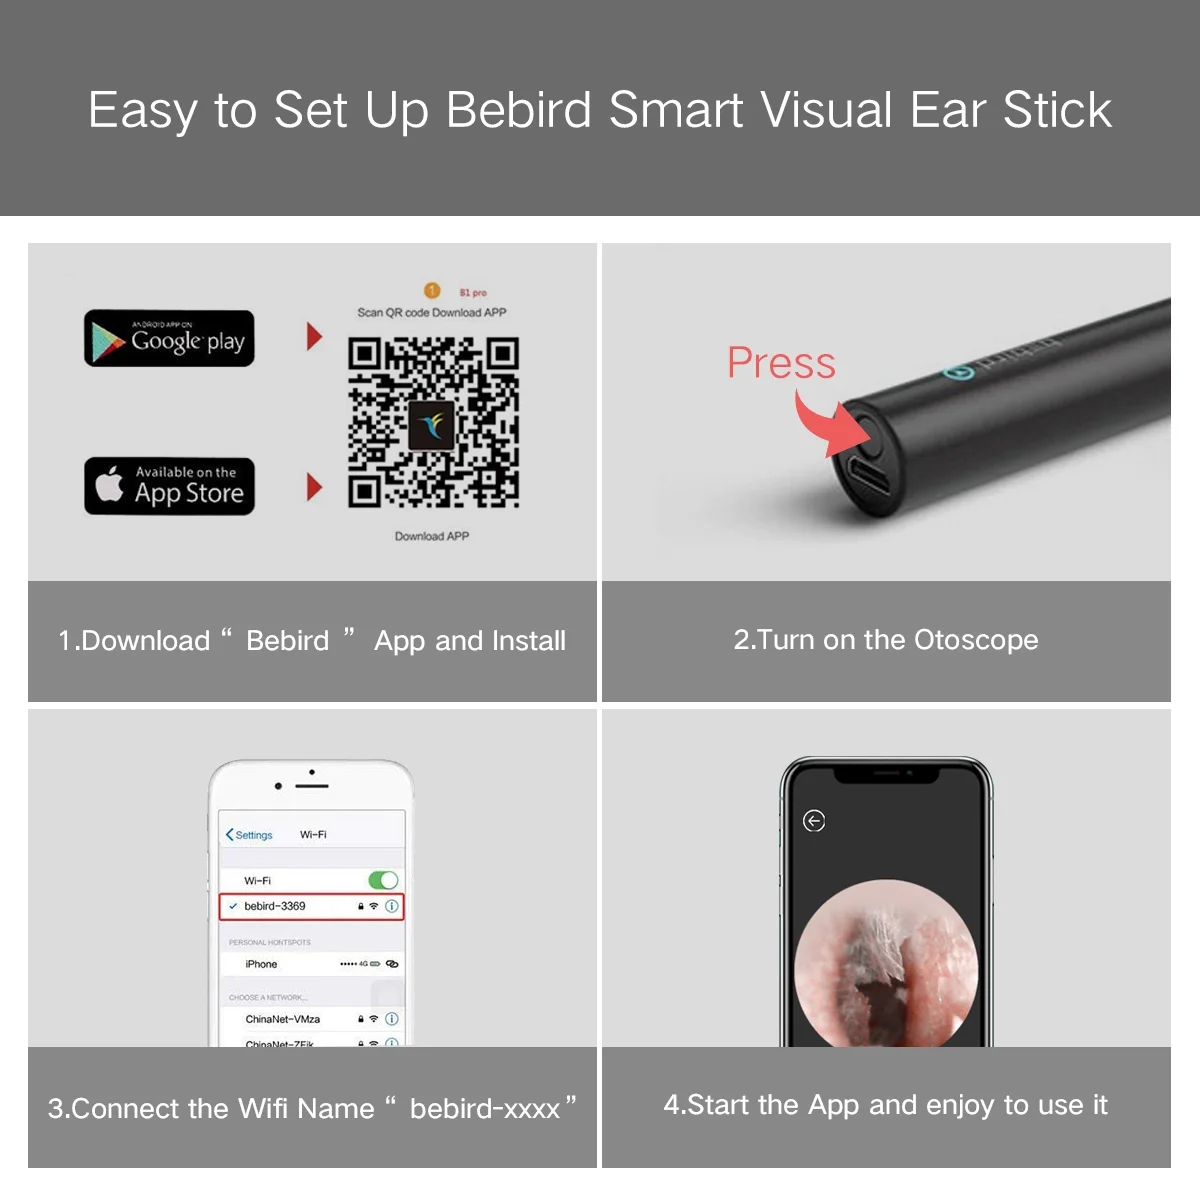 Xiaomi Youpin Ear WIFI Wireless Smart Visual Ear Cleaning Stick with Otoscope Endoscope Camera (Analog Camera 1920 x 1080 CCD Mini camera) 13